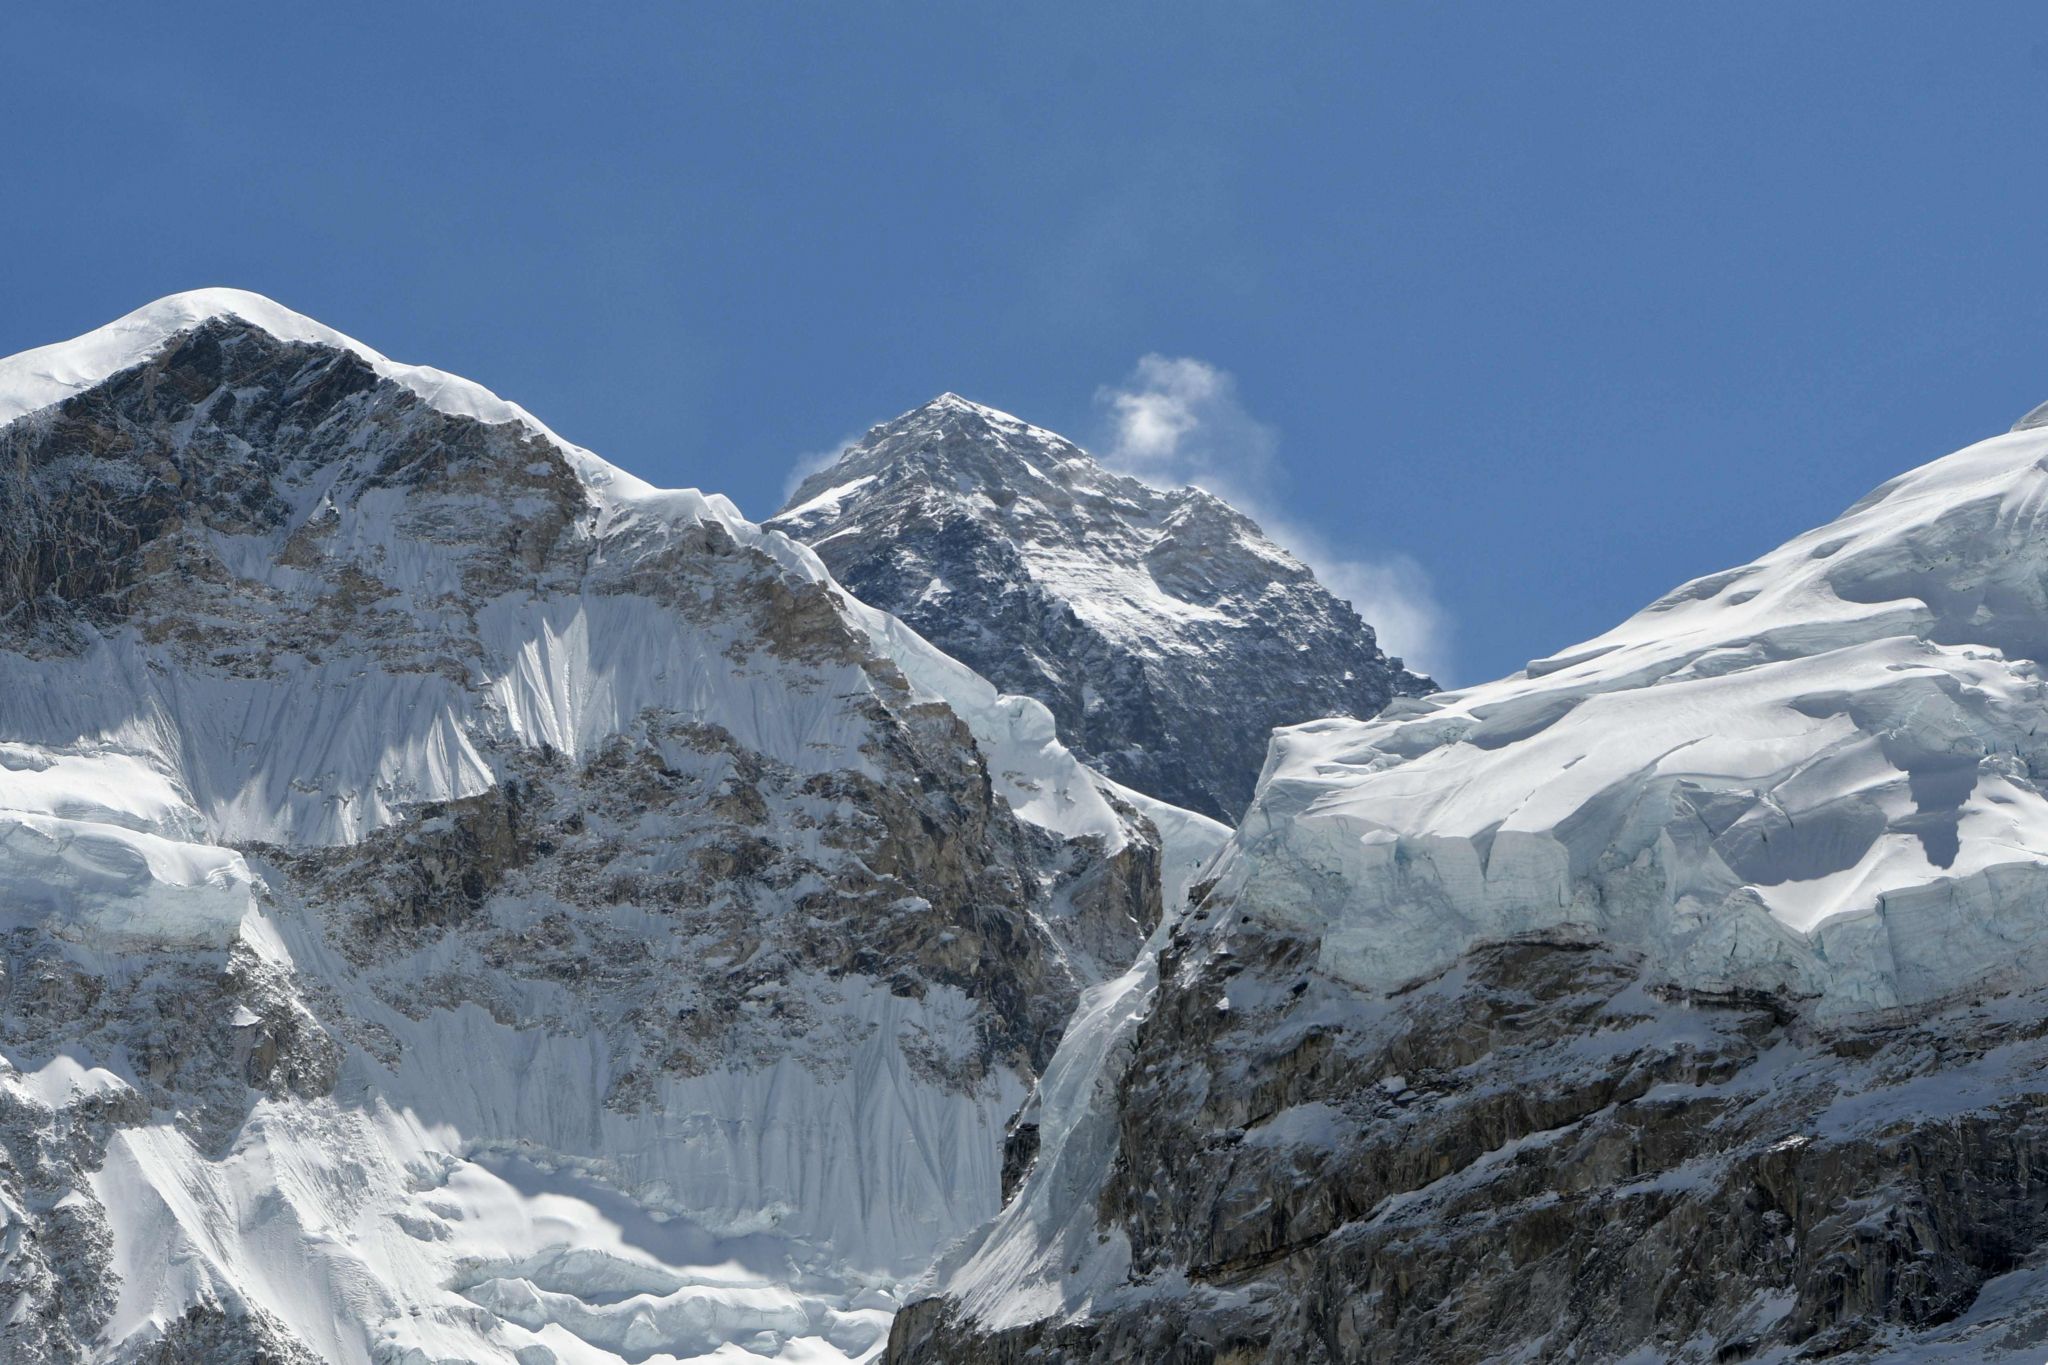 Photo of Mount Everest taken on 26 April 2018